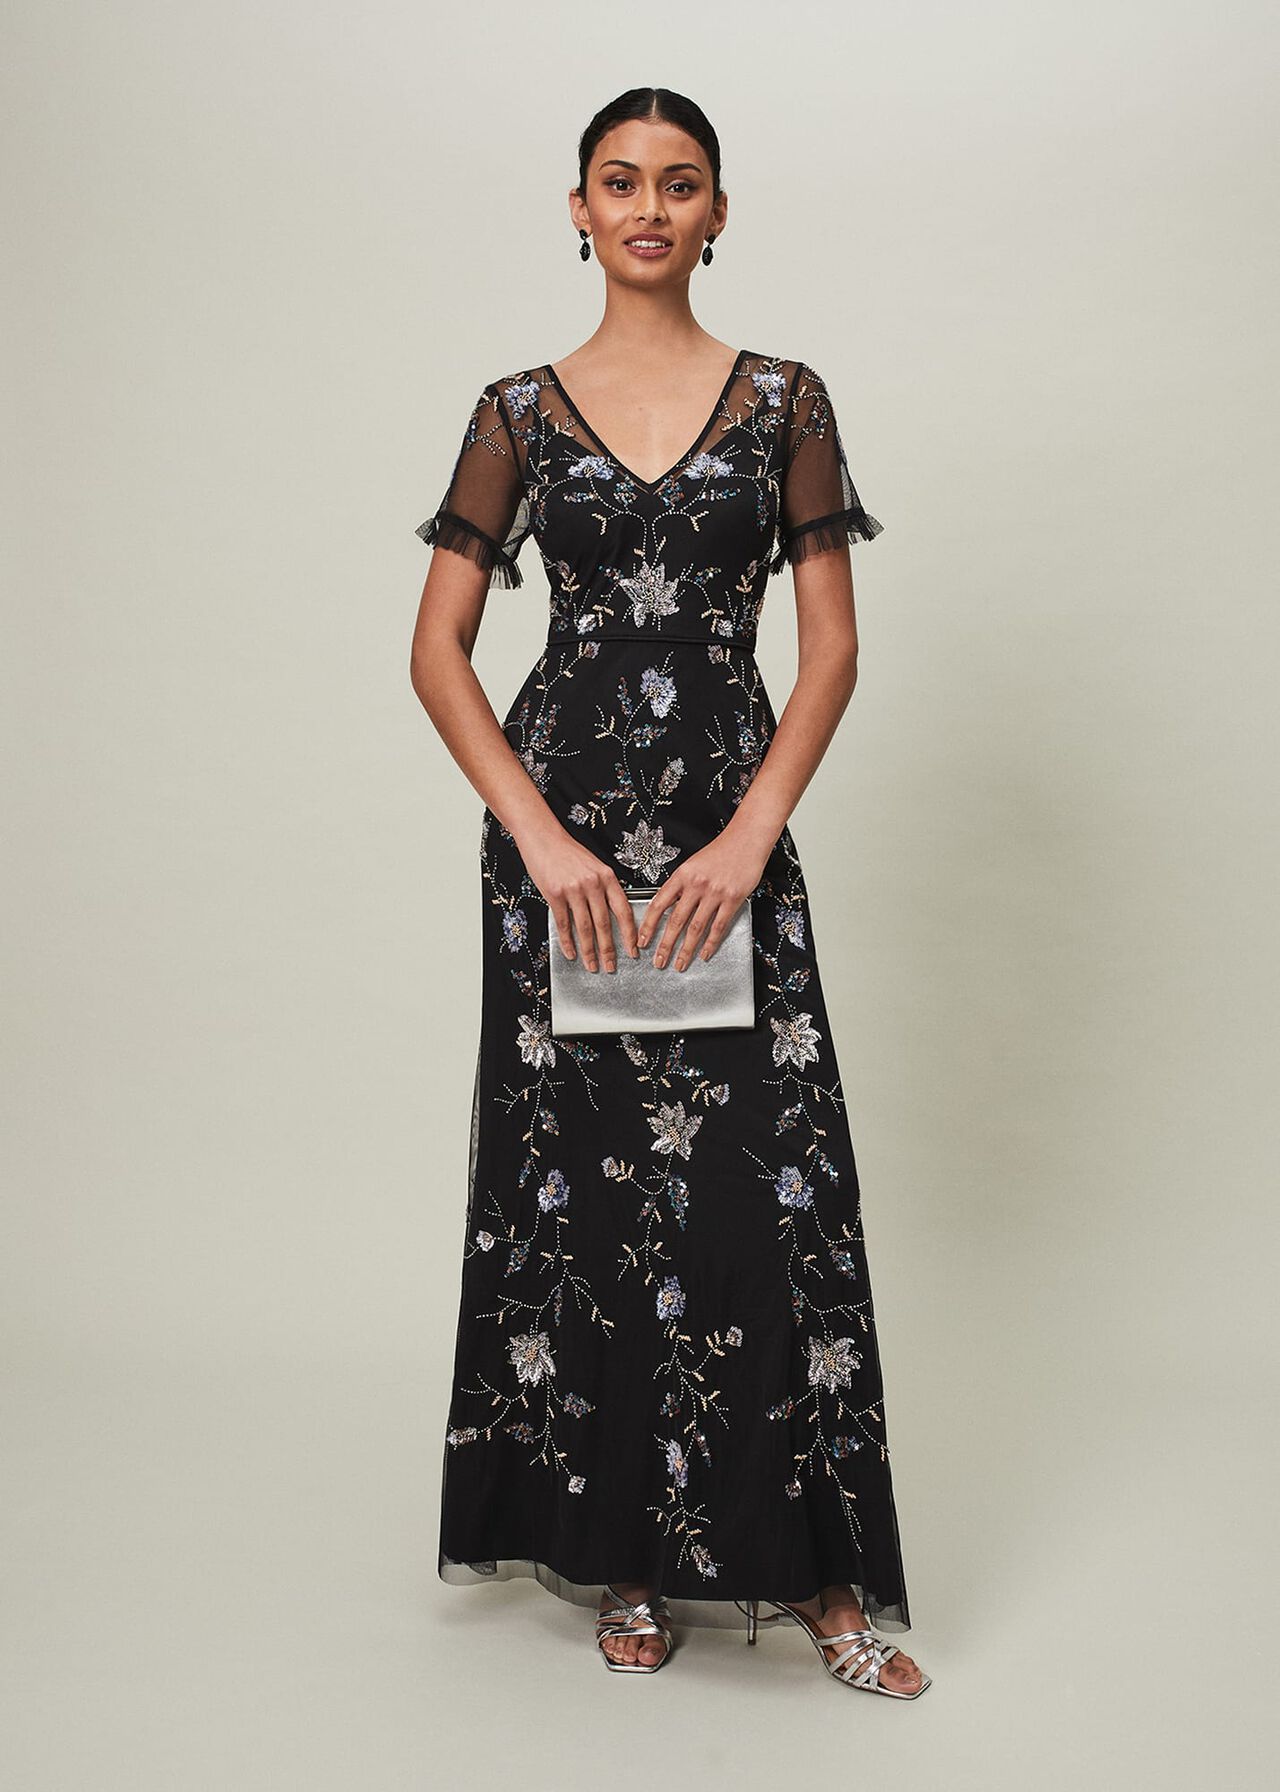 Sierra Sequin Floral Dress